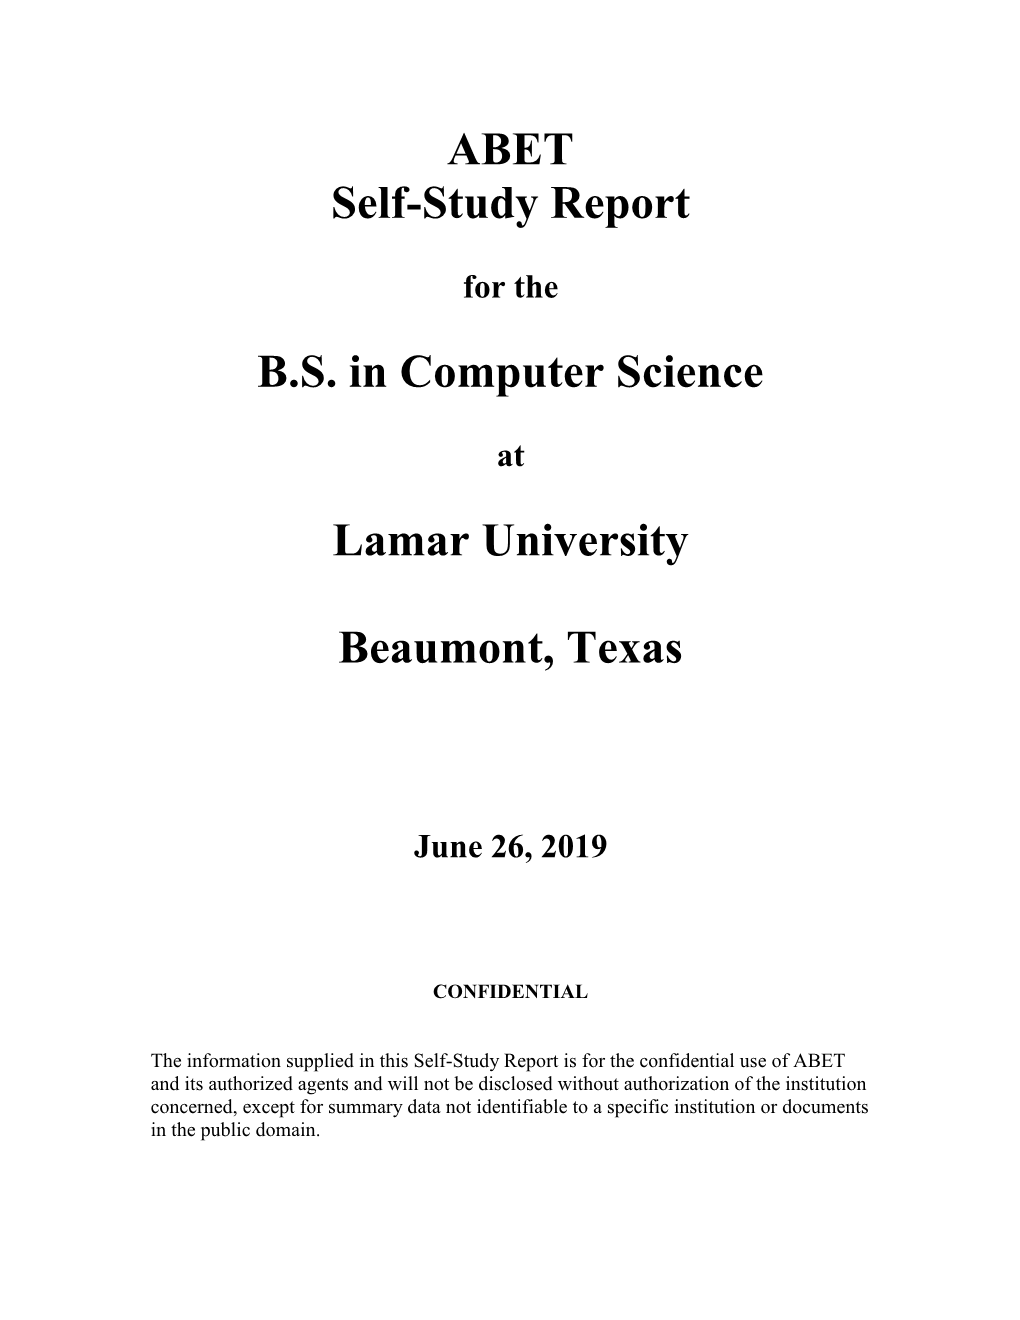 ABET Self-Study Report B.S. in Computer Science Lamar